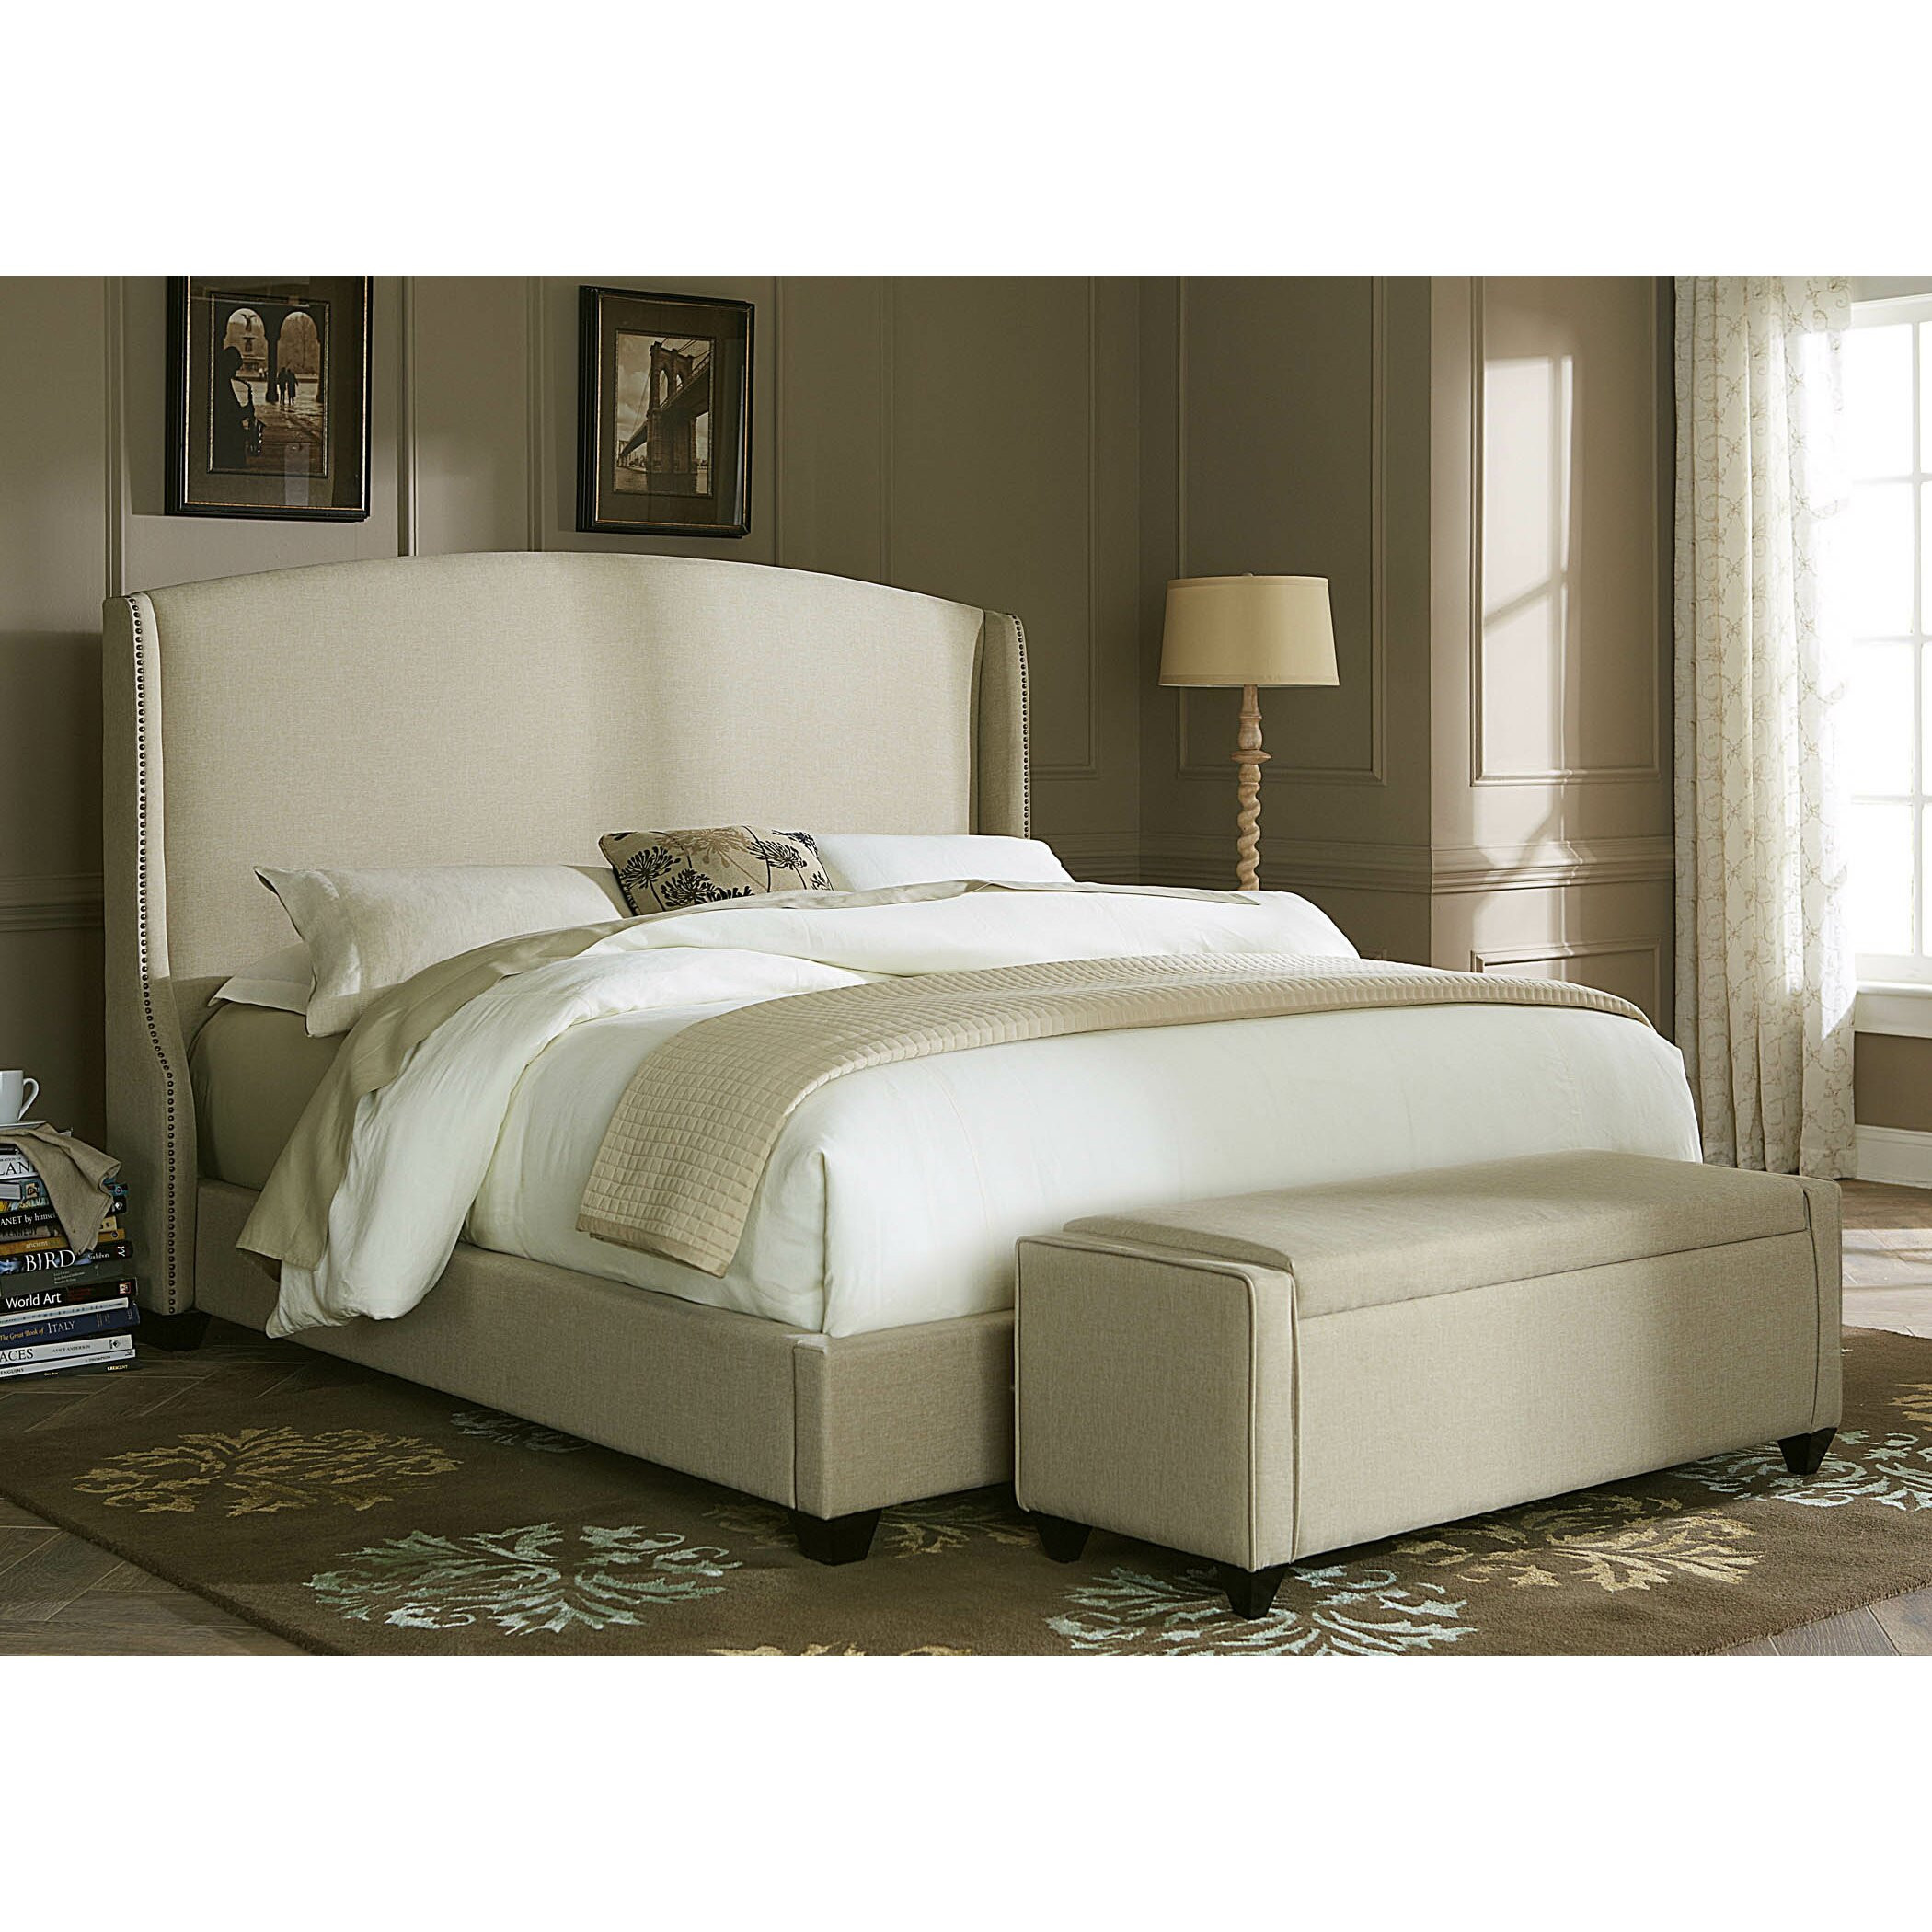 Large Storage Bench For Bedroom
 Liberty Furniture Upholstered Storage Bedroom Bench